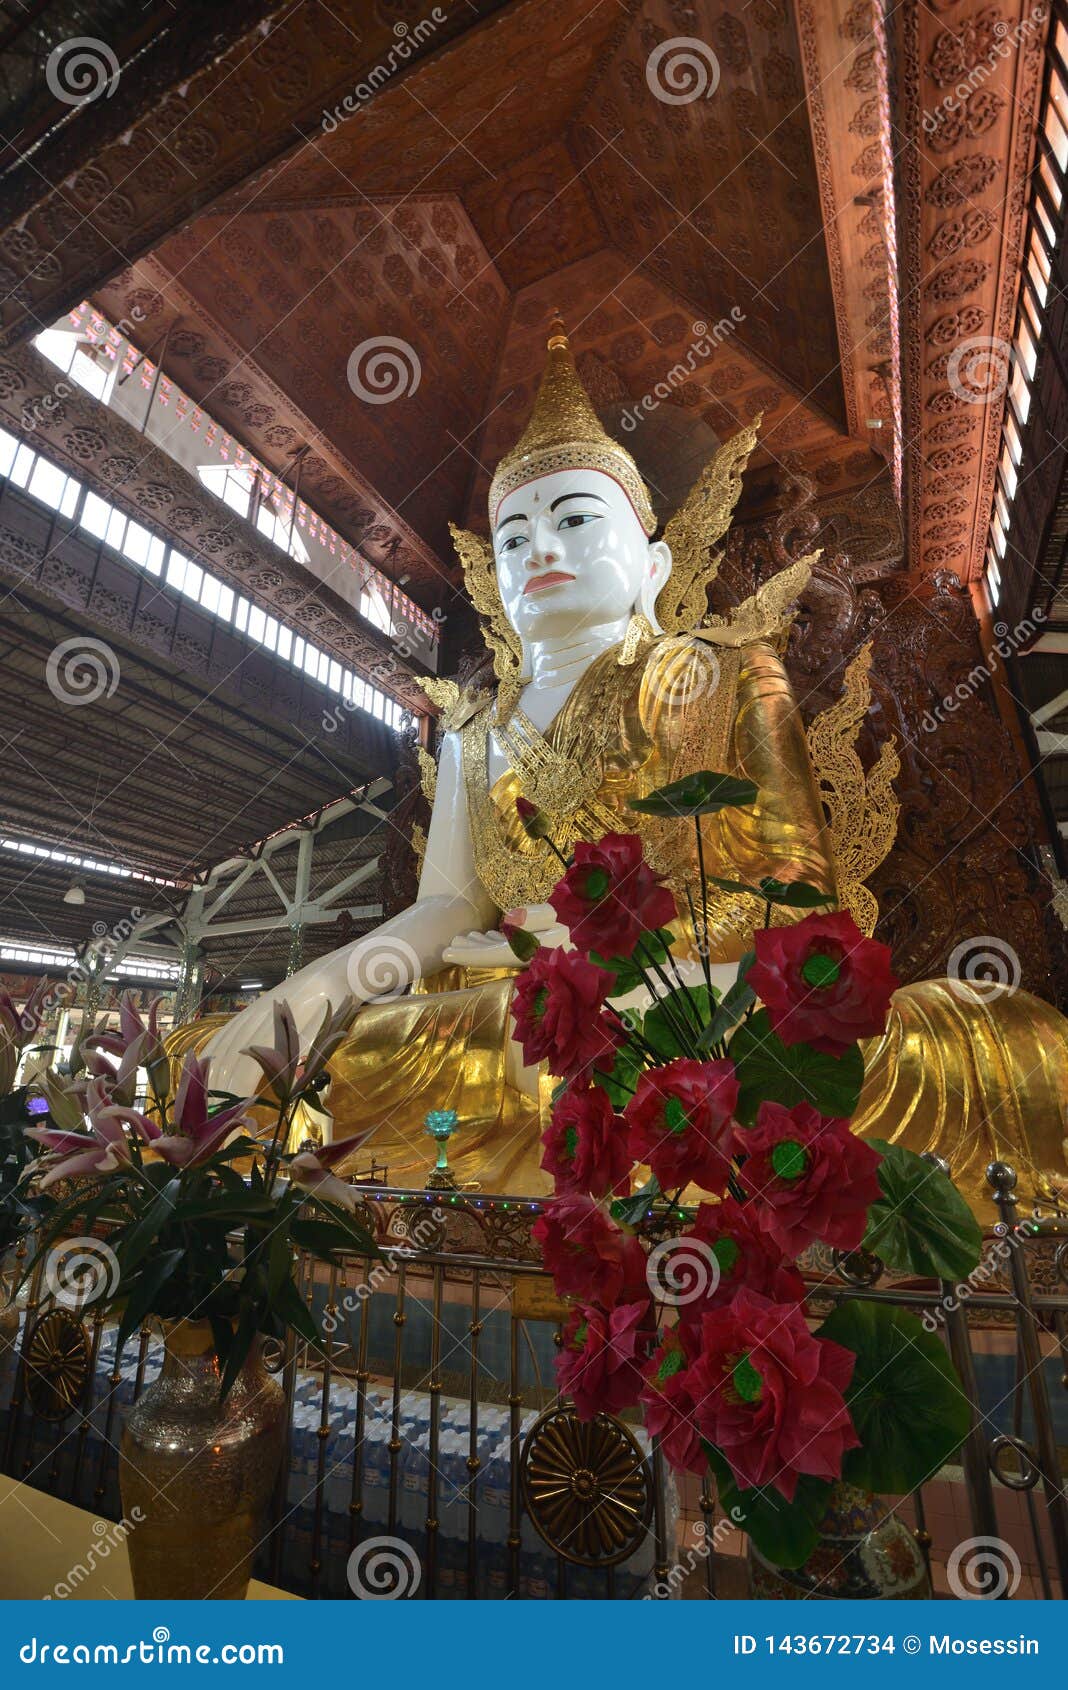 yangon ngahtatgyi buddha temple